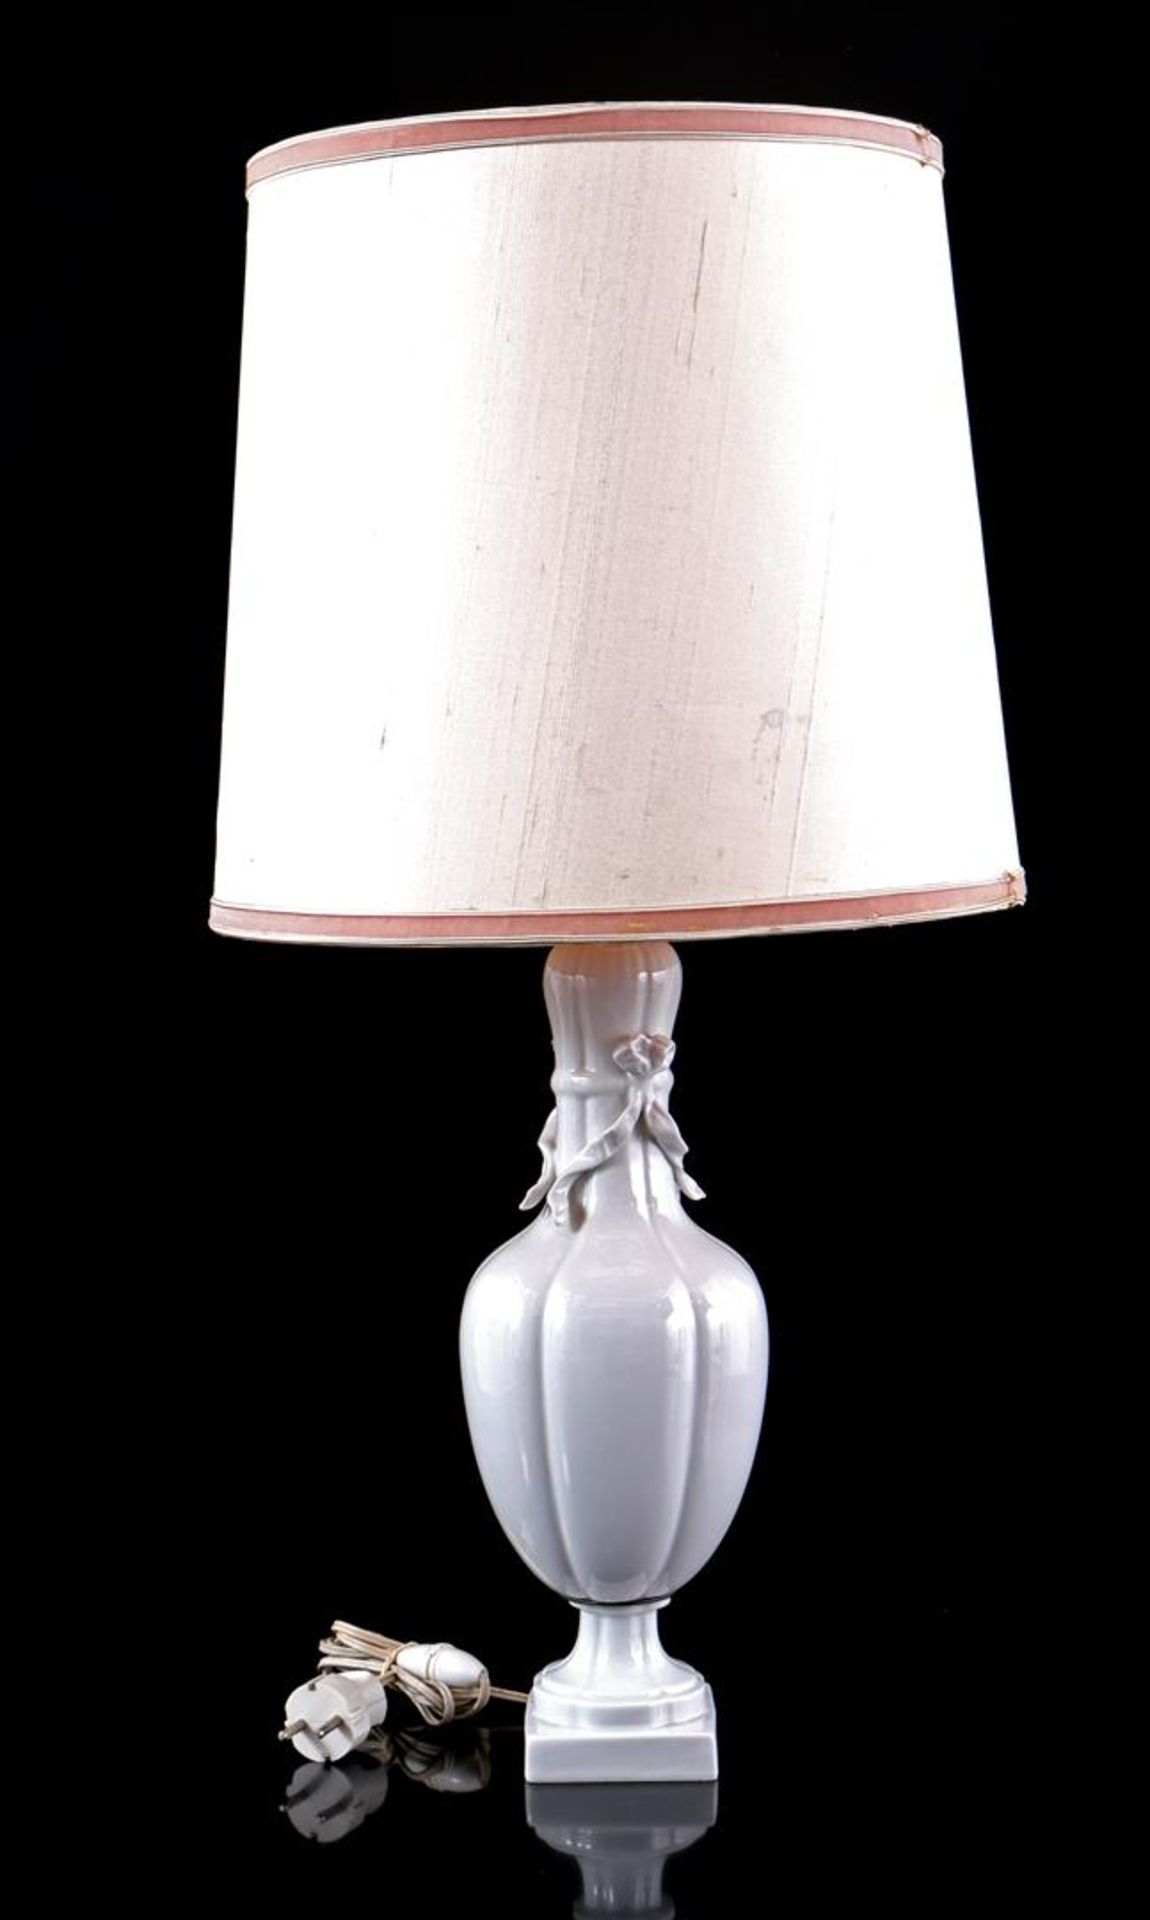 White porcelain table lamp base